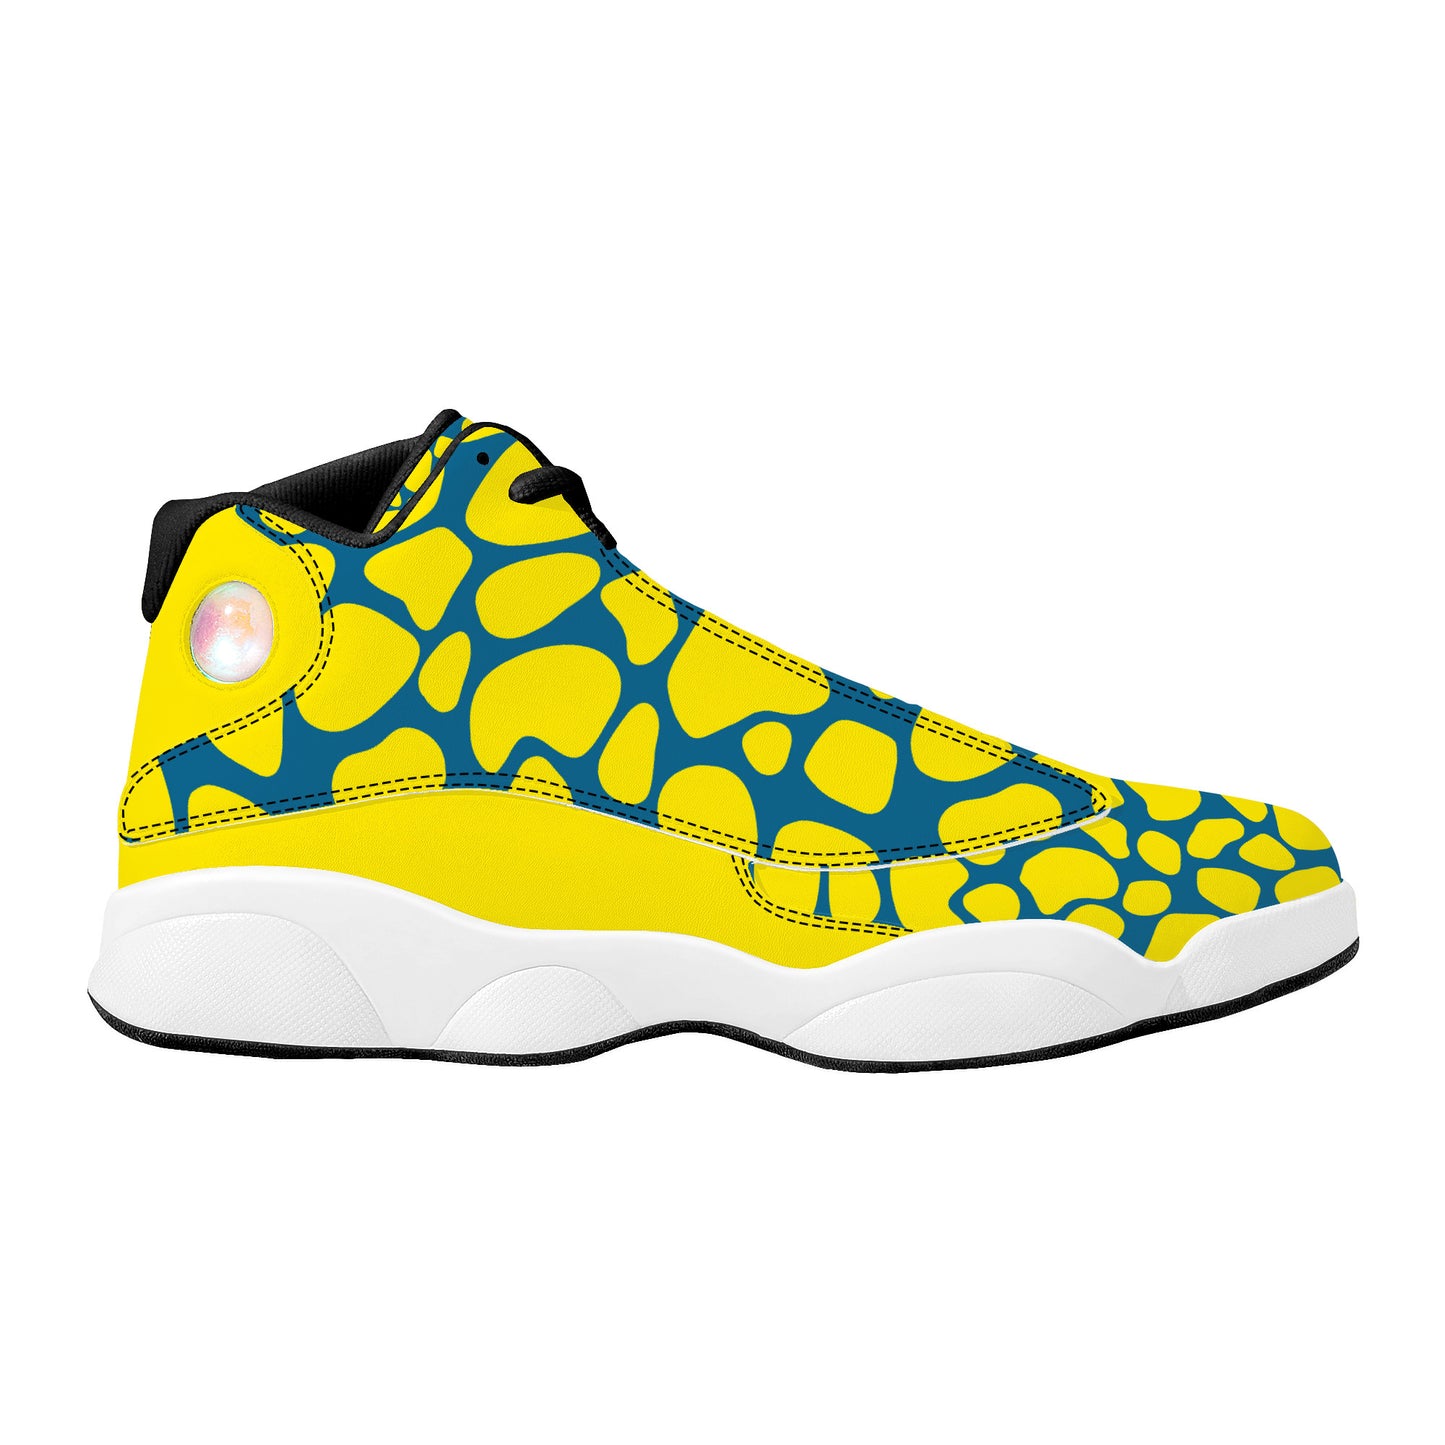 "Giraffe" Basketball Shoes